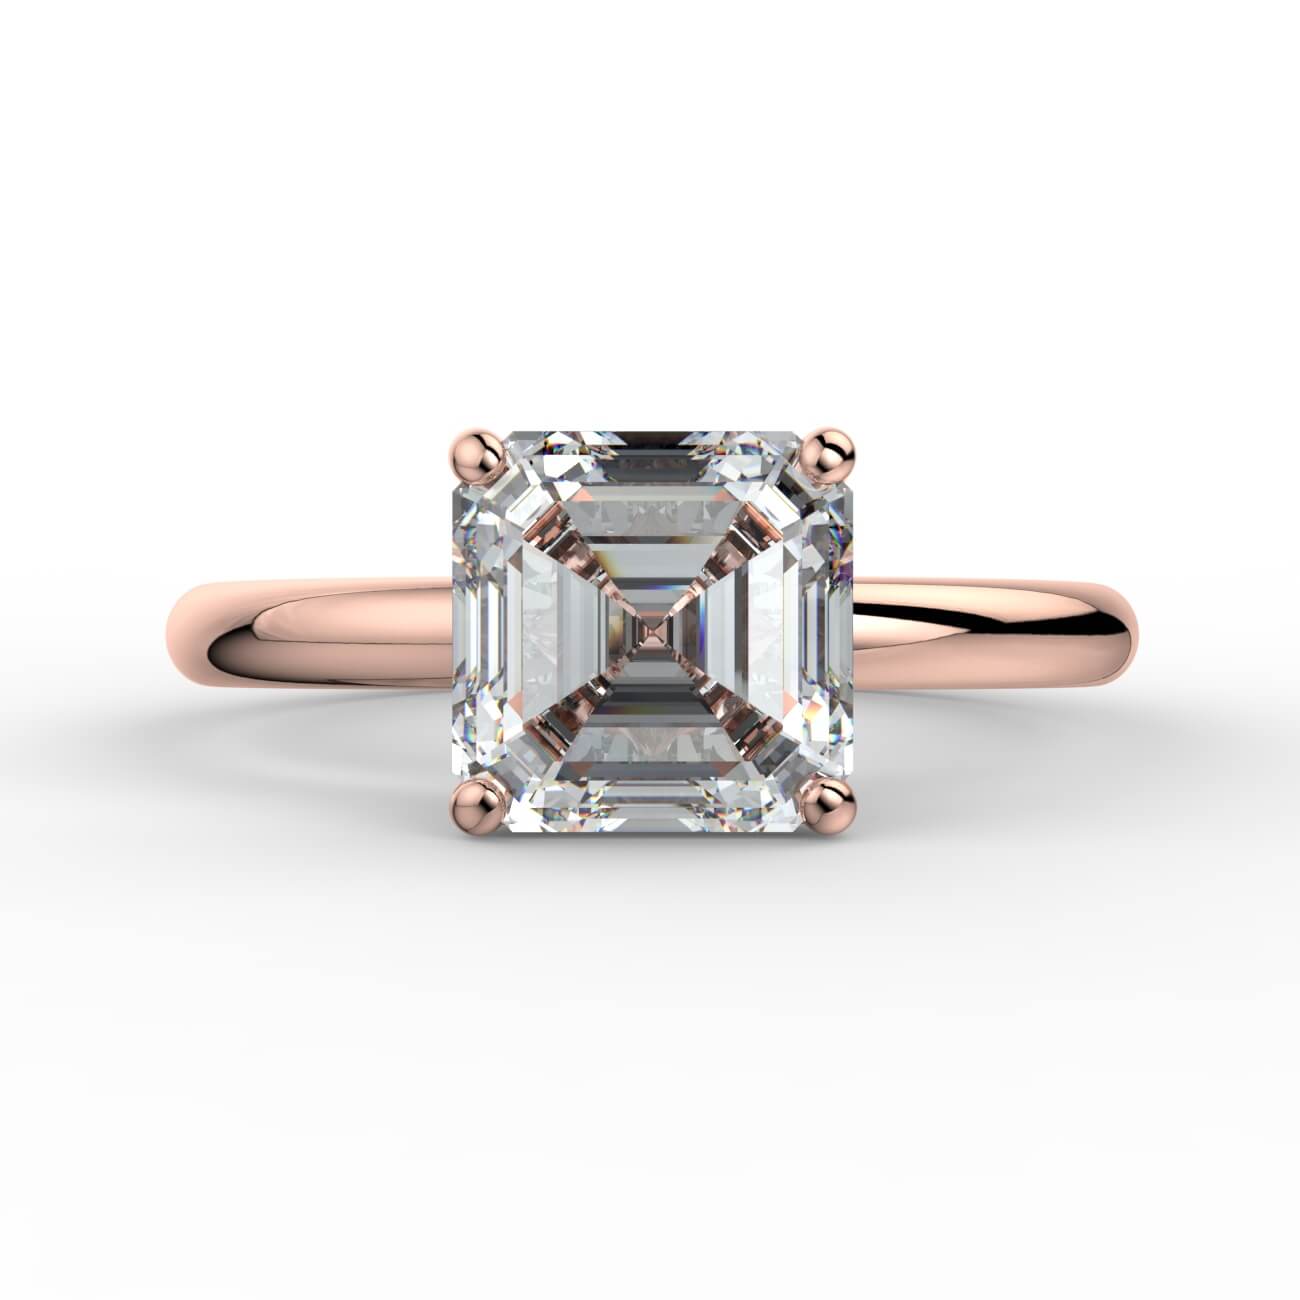 Comfort fit 4 claw asscher cut solitaire diamond ring in rose gold – Australian Diamond Network